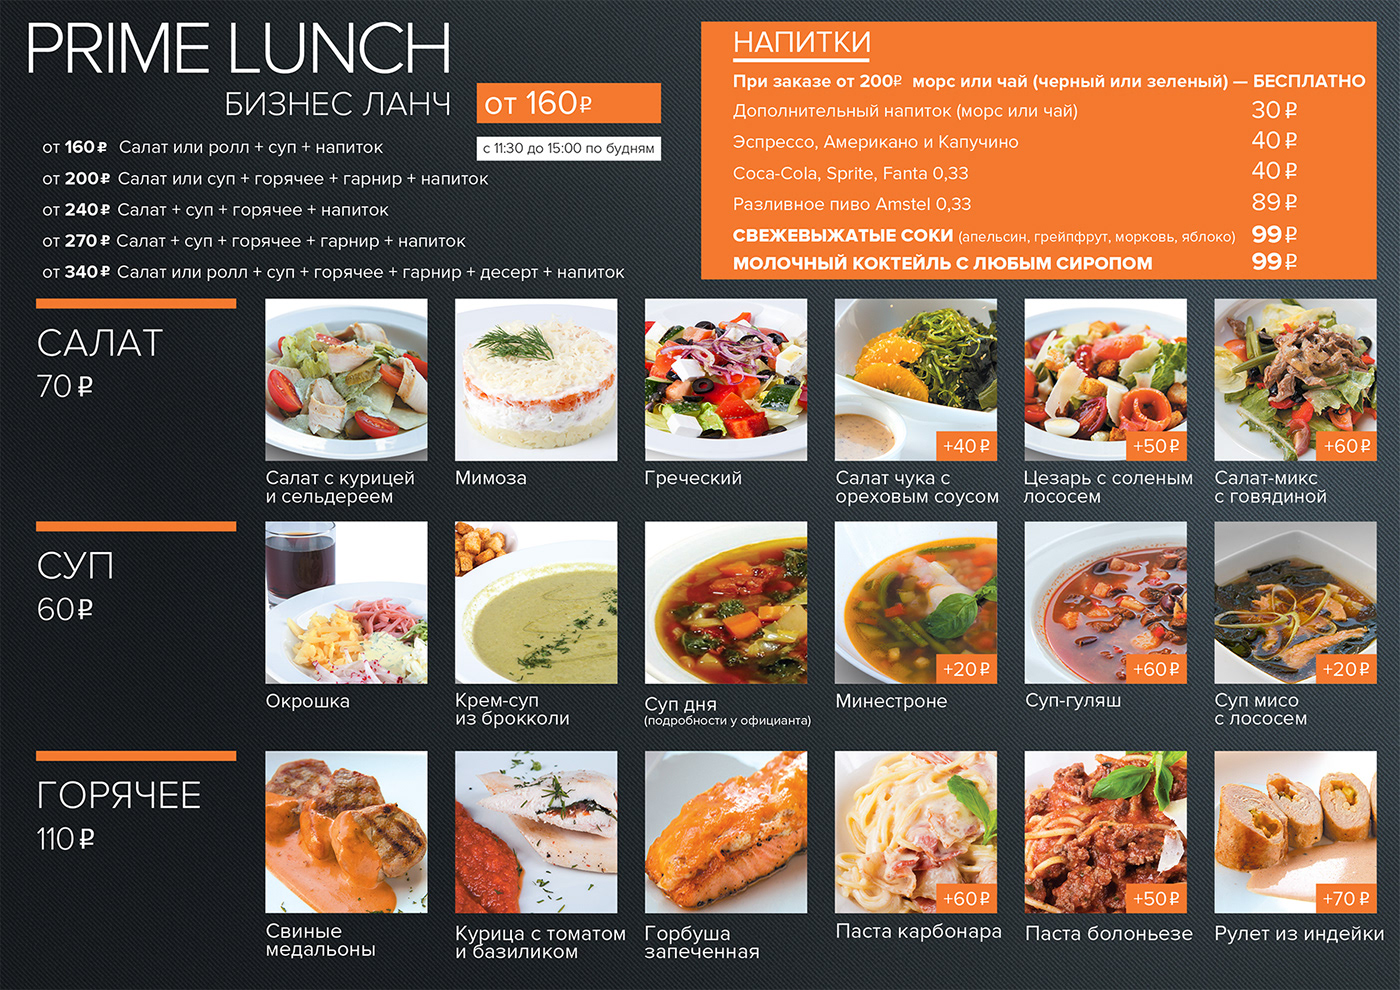 PRIME restaurant business lunch menu.